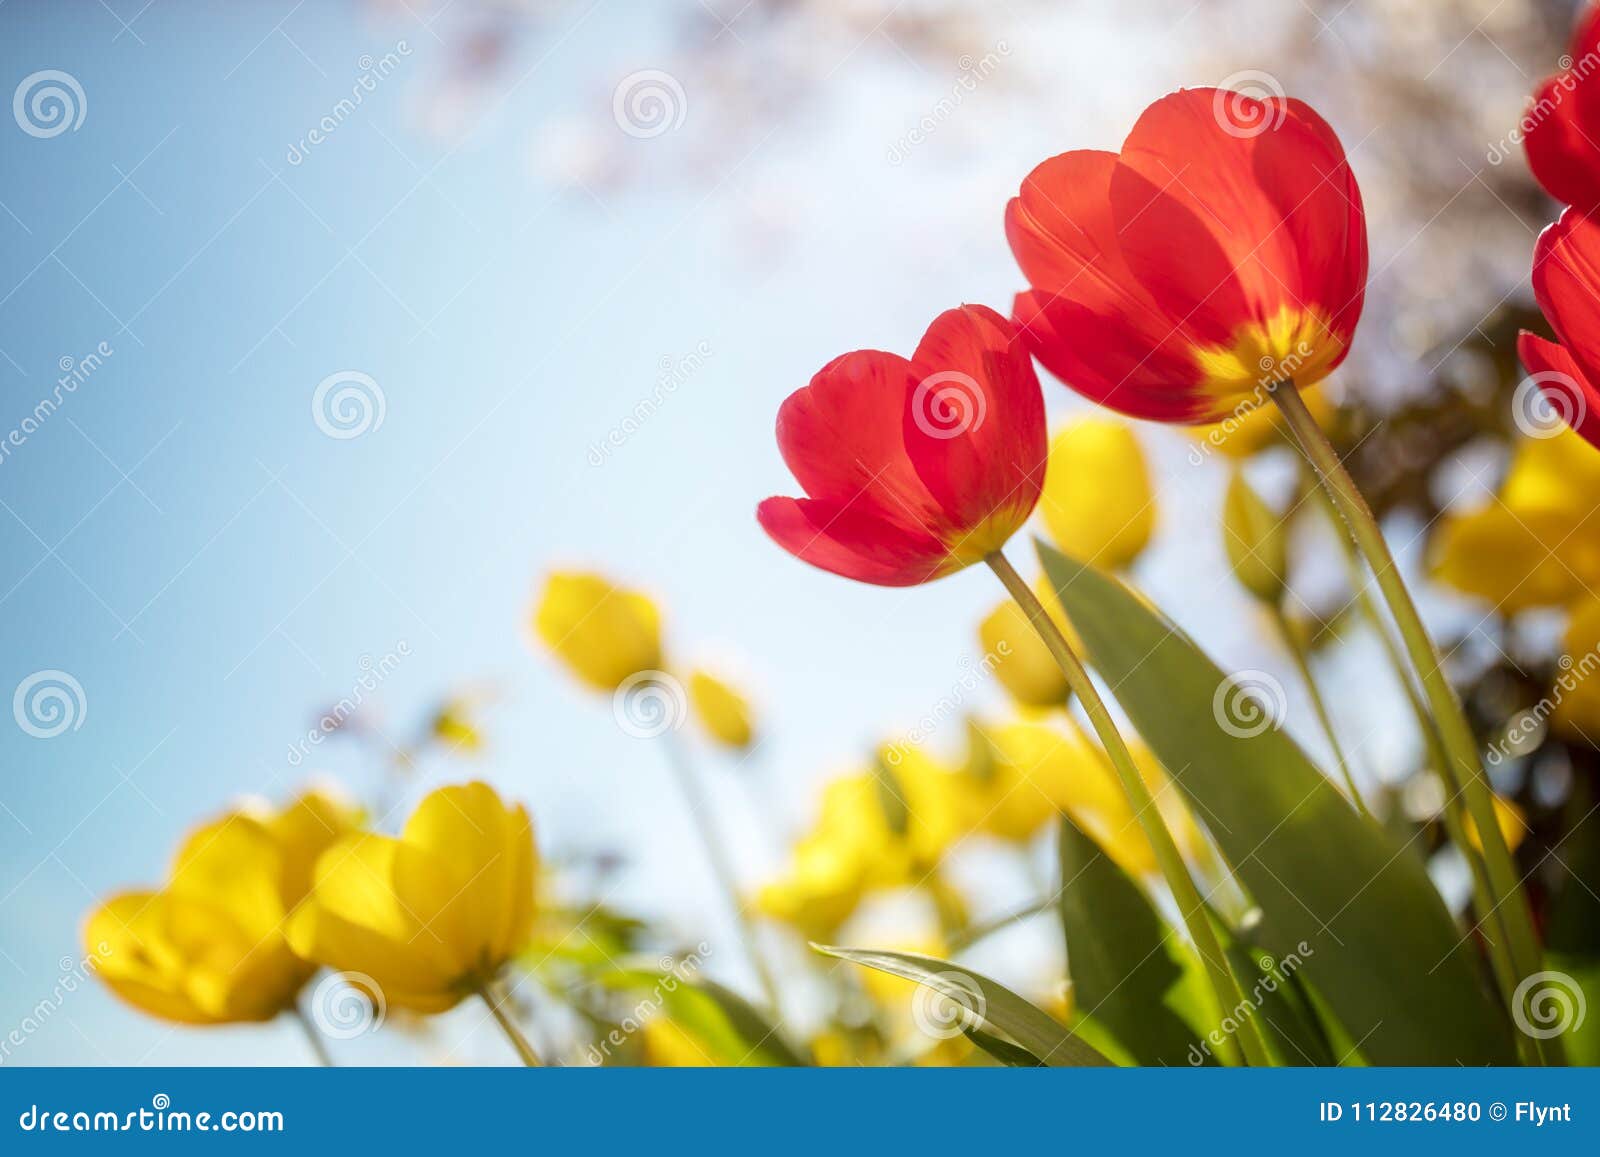 springtime tulip flowers against a blue sky in the sunshine